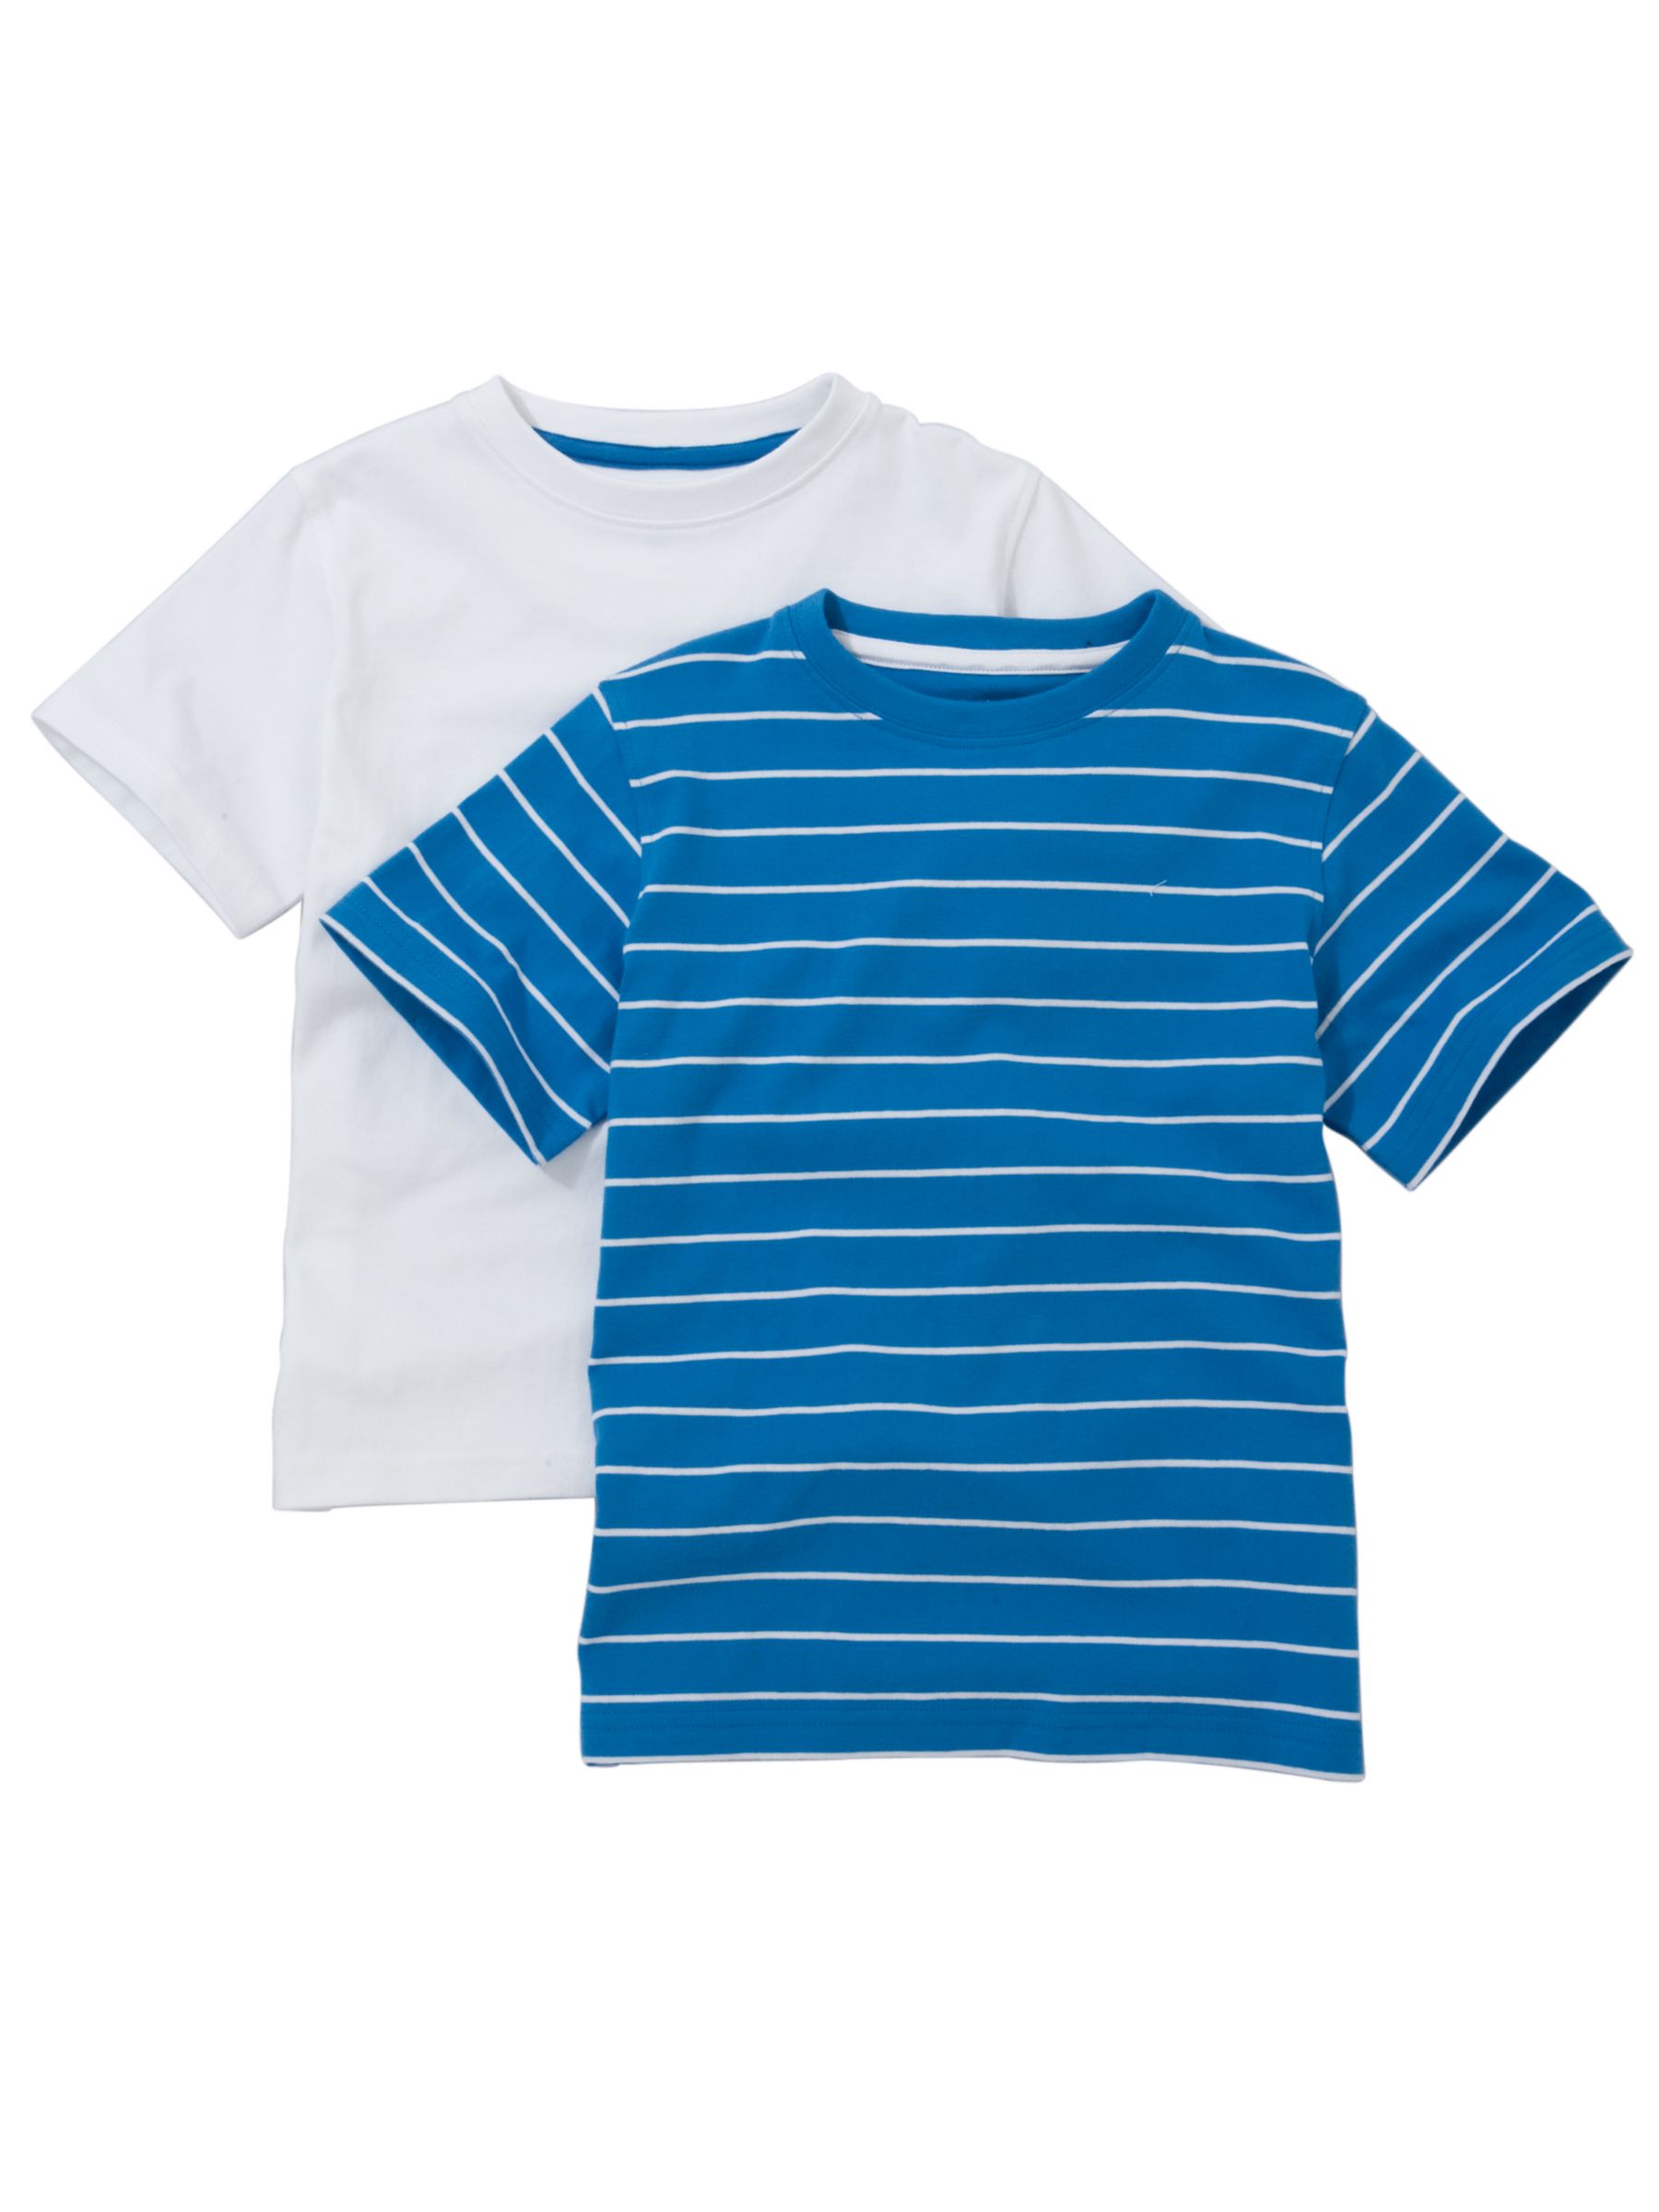 Stripe Print and Plain T-Shirts,